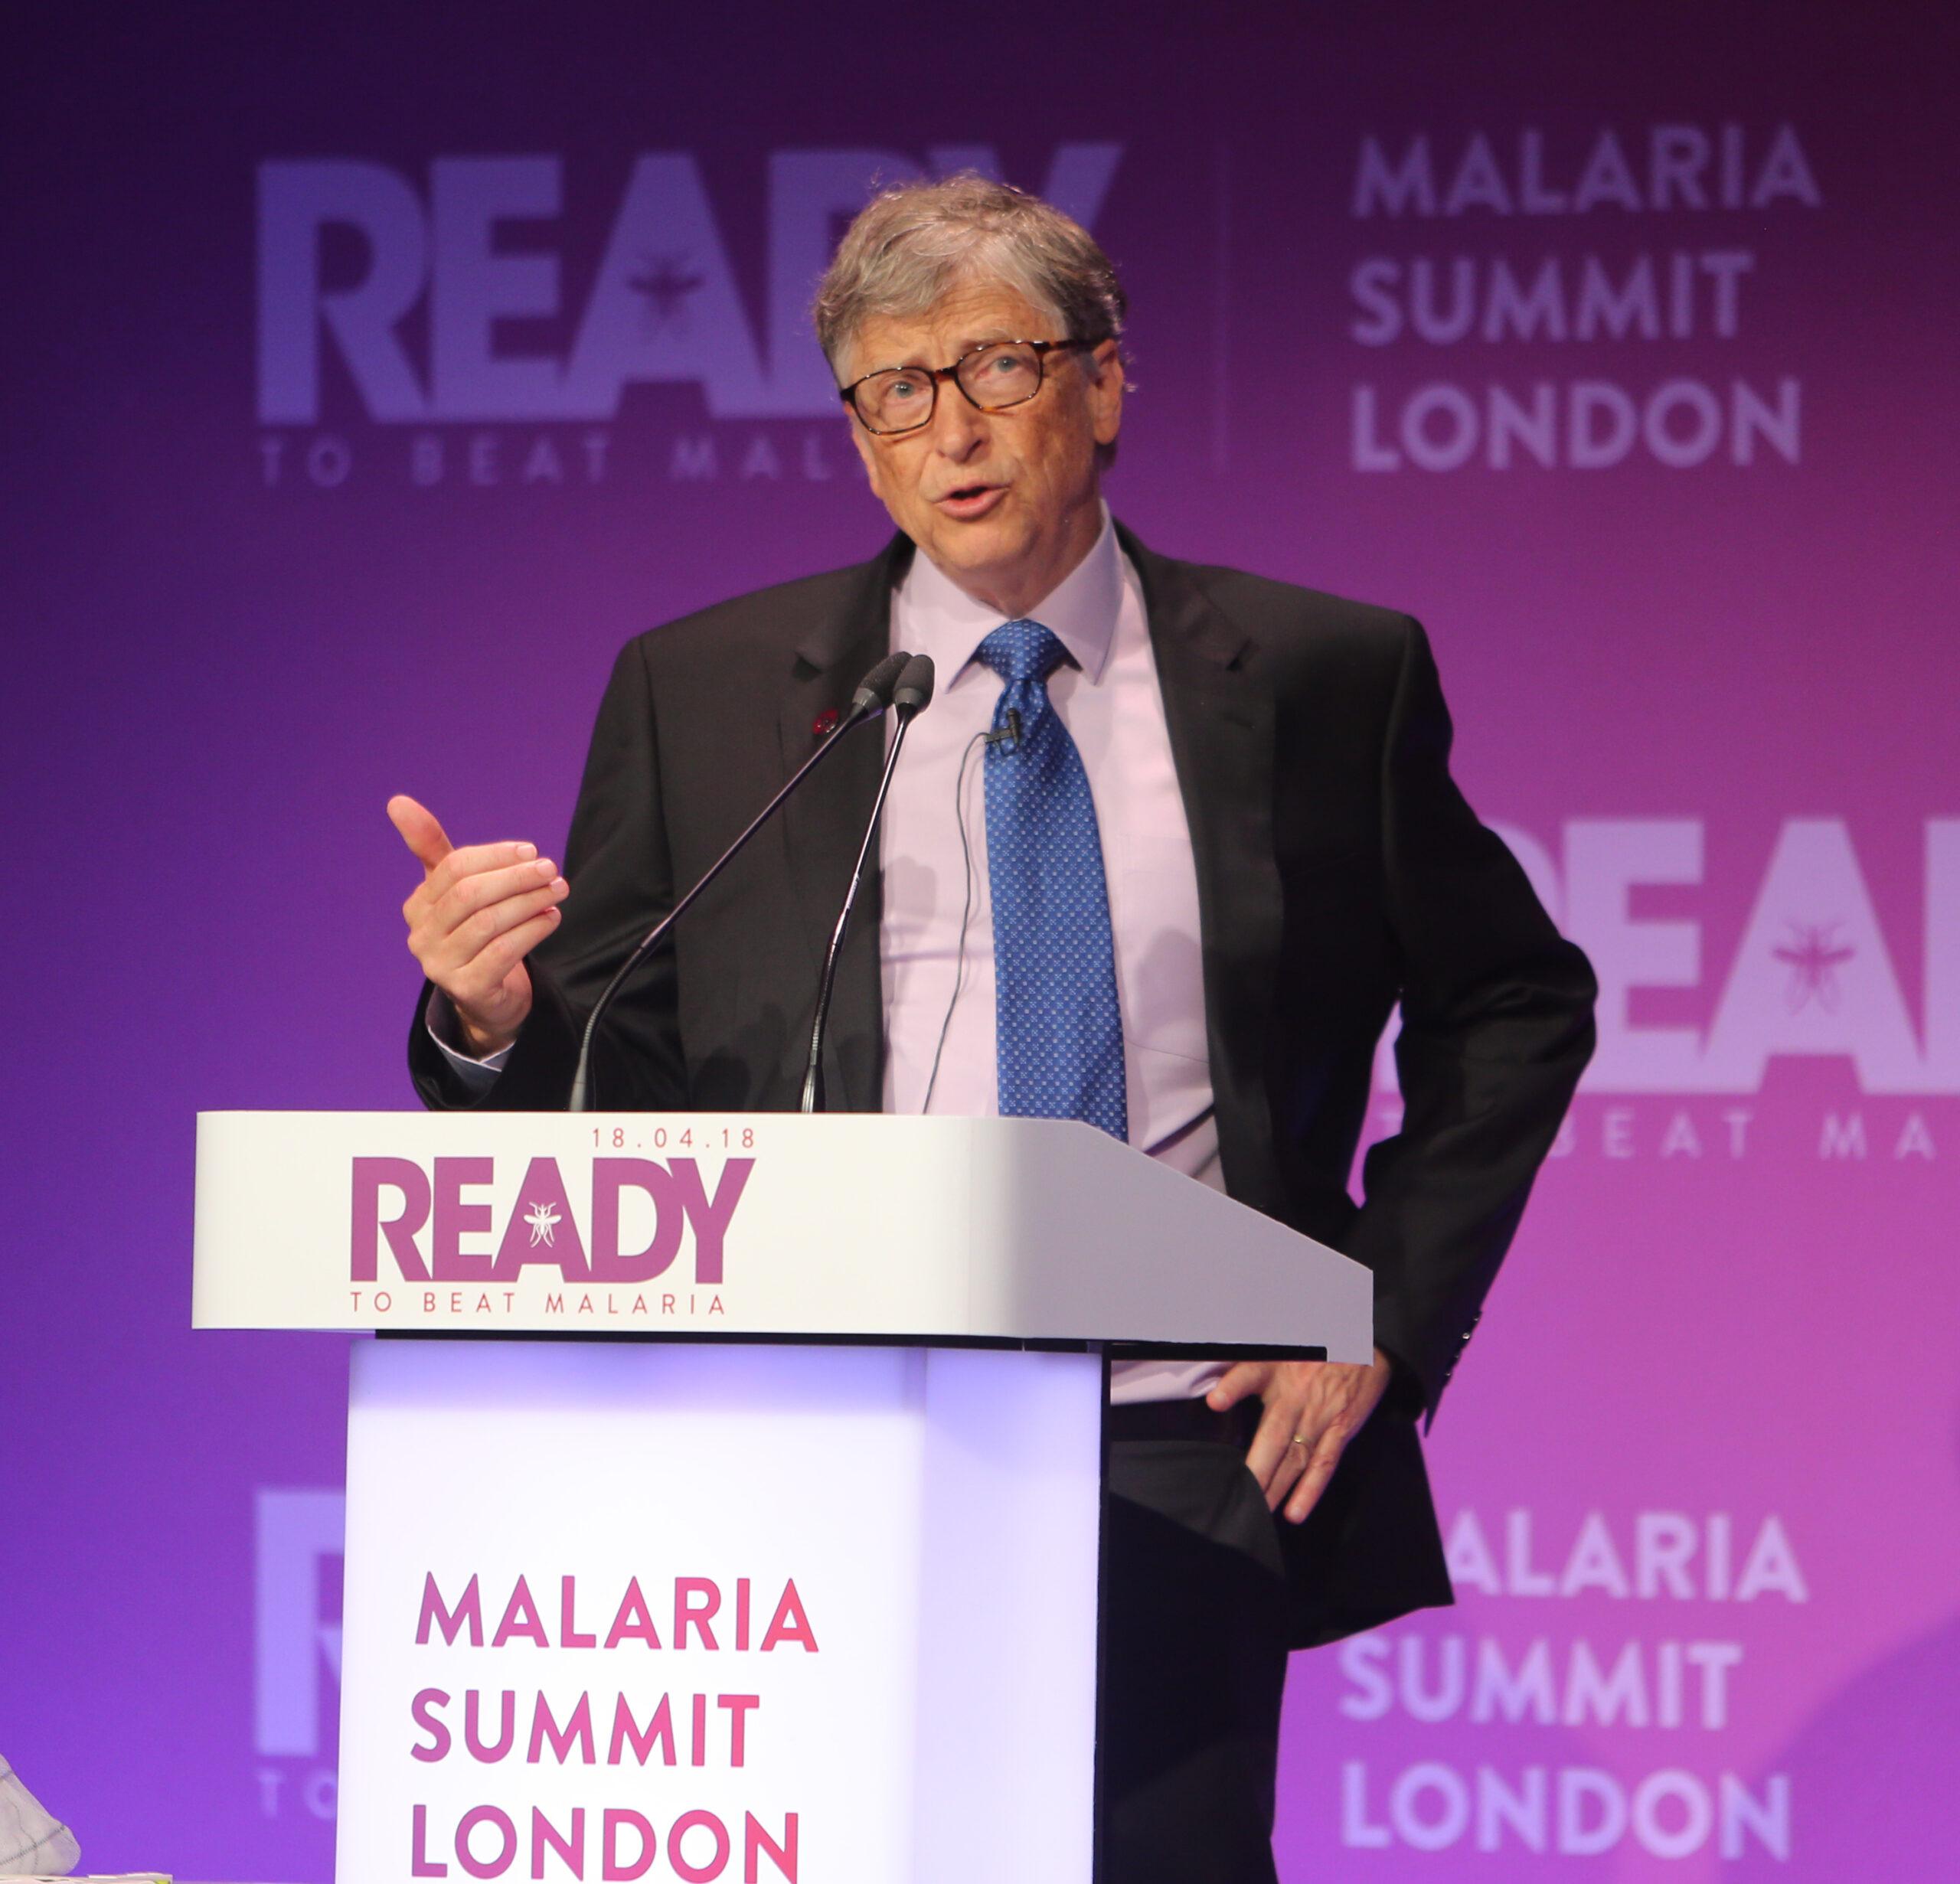 Bill Gates at the Ready To Beat Malaria London Summit